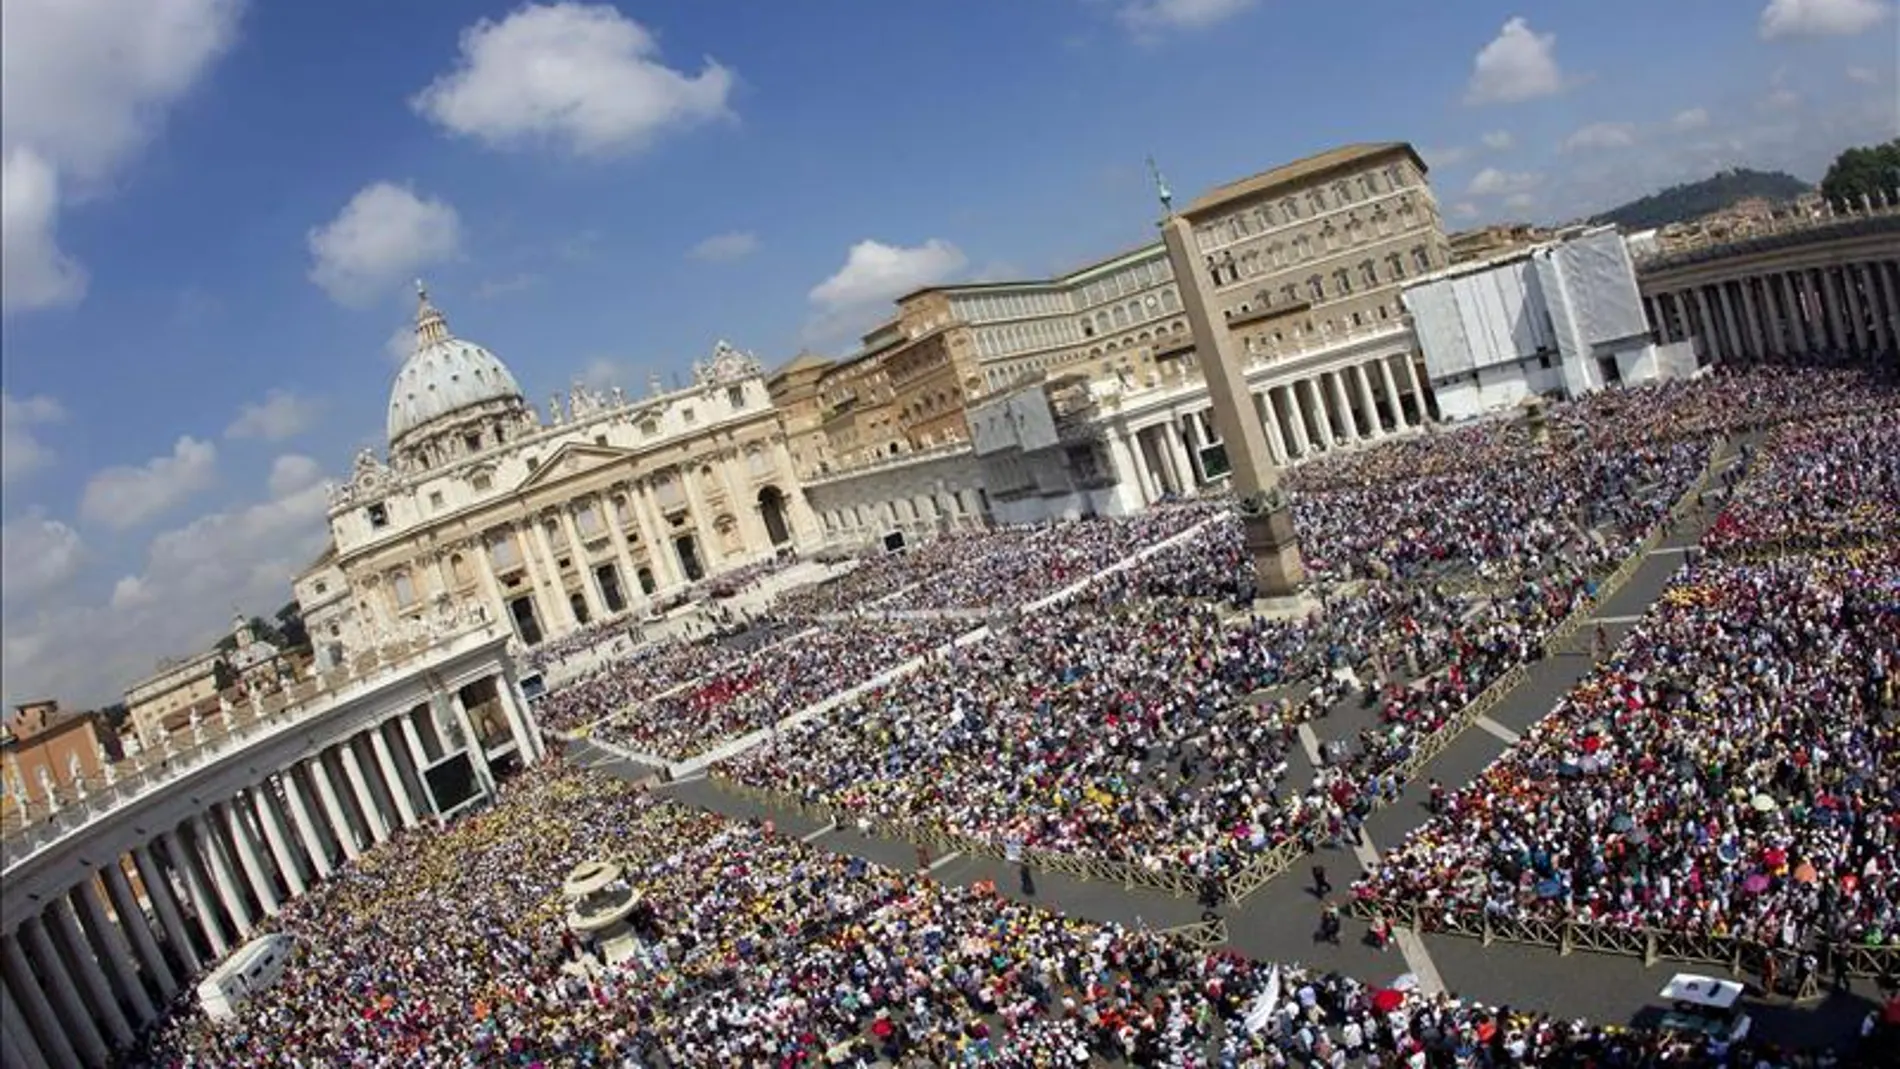 Vista general de la Plaza de San Pedro en el Vaticano